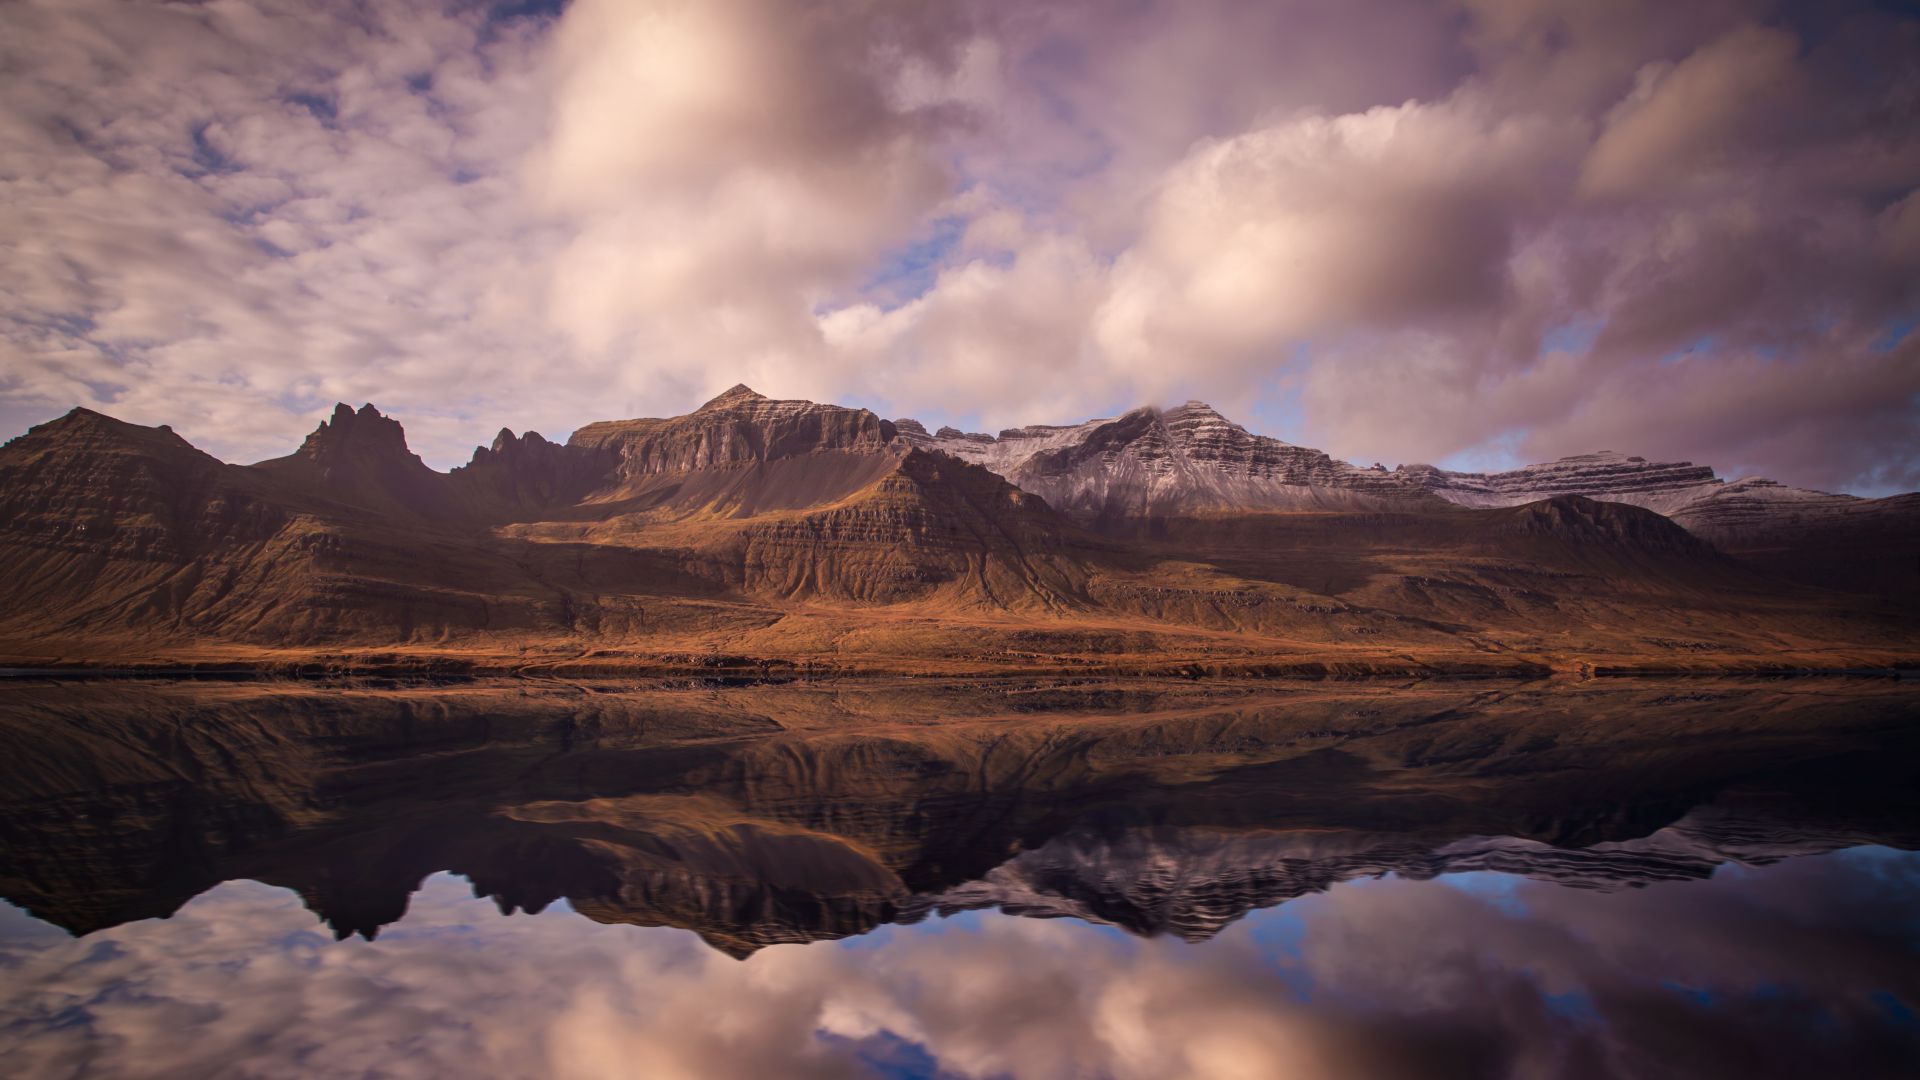 Iceland, 4k, 5k wallpaper, mountains, river, clouds (horizontal)